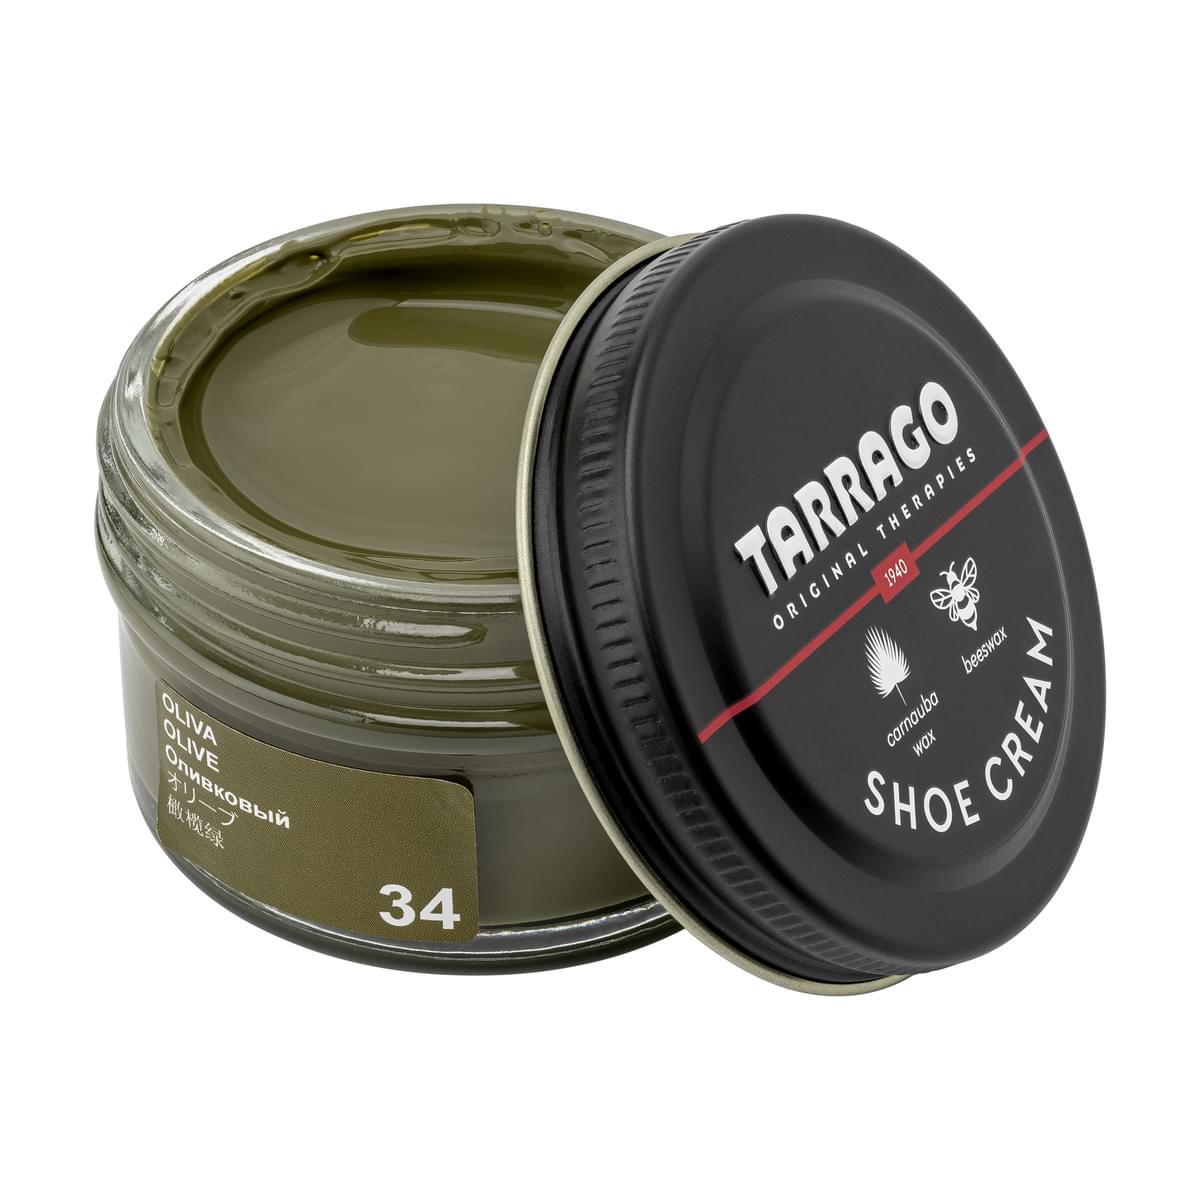 Tarrago Shoe Cream  - Olive - 34